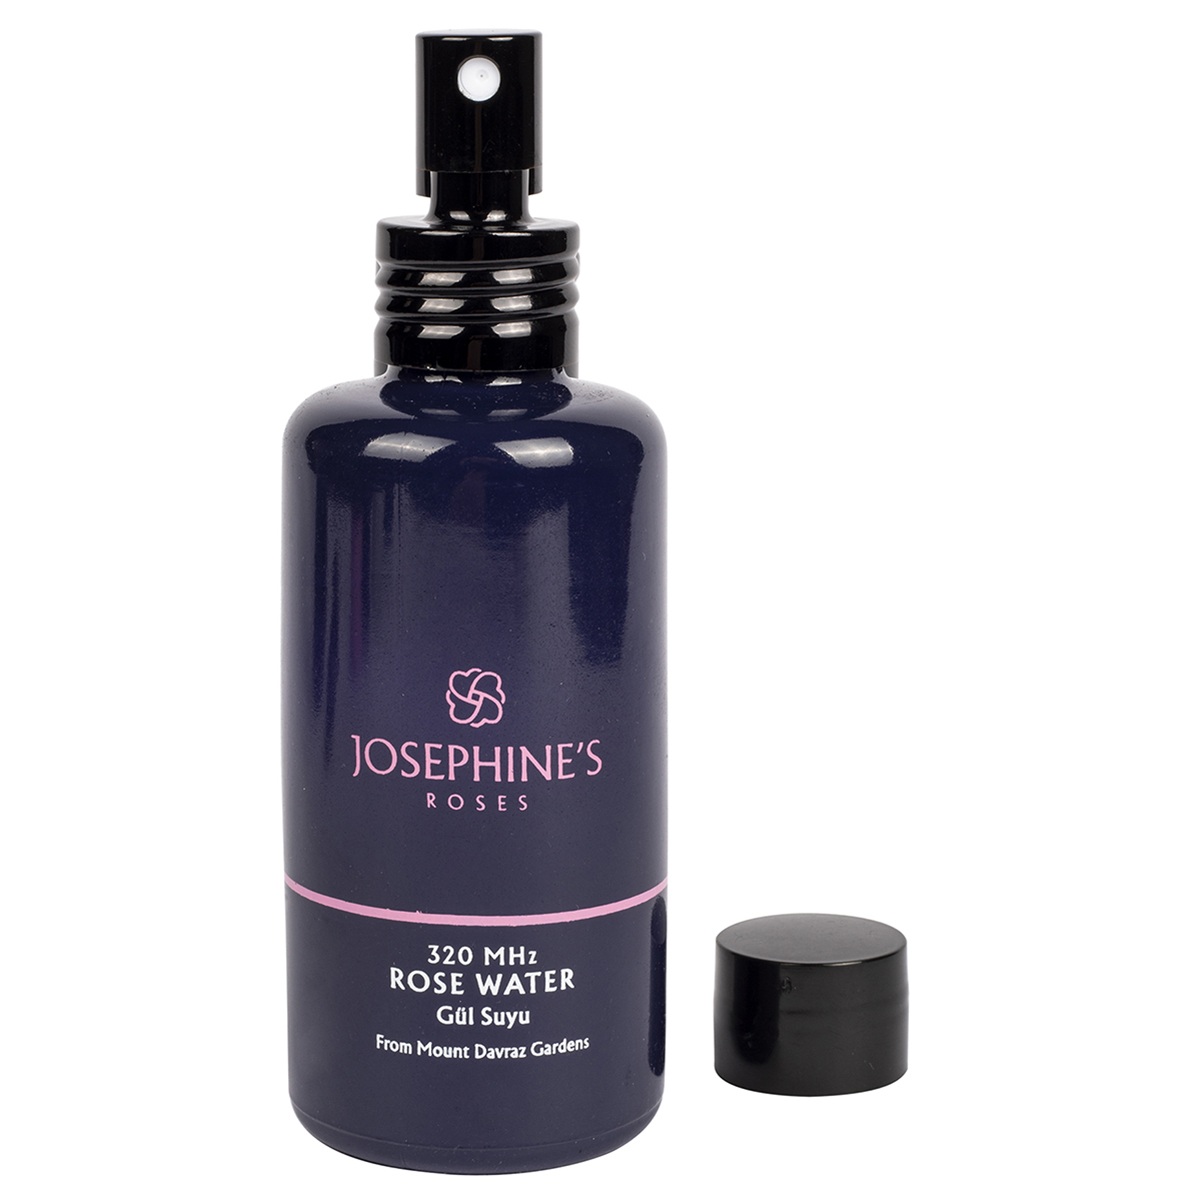 Josephine’s roses rose water 200 ml